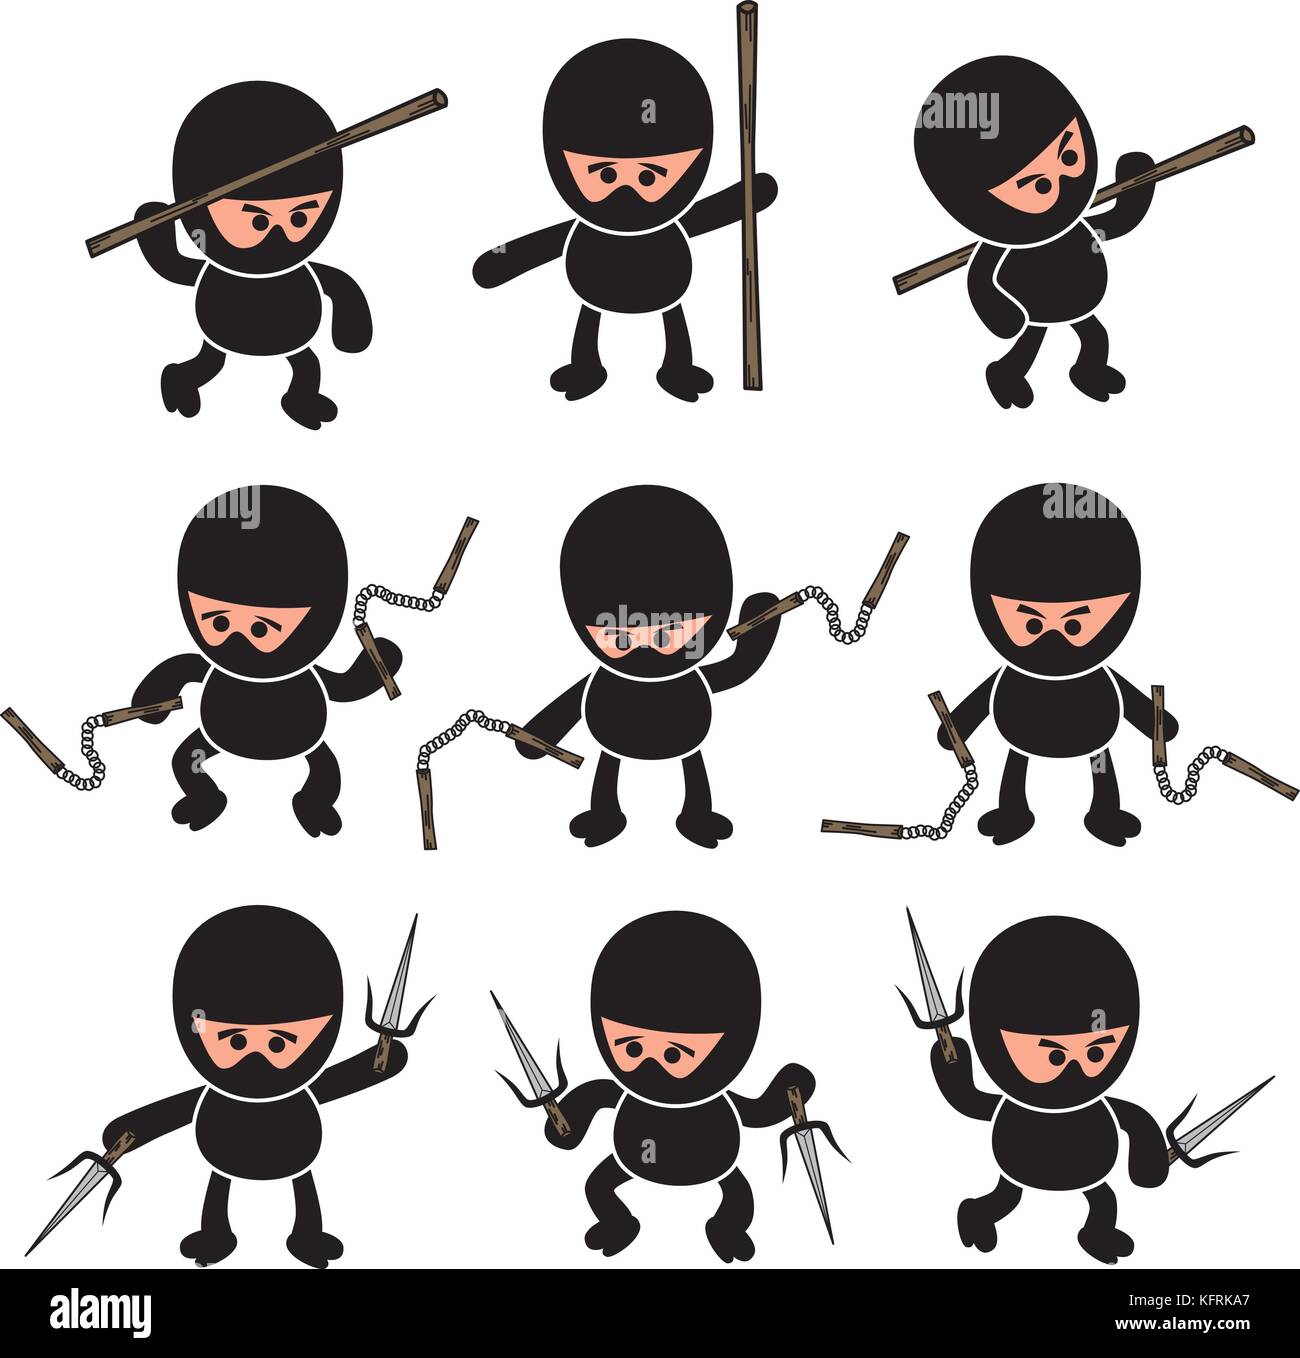 Ninja- An Illustration of a Ninja Stock Vector Image & Art - Alamy